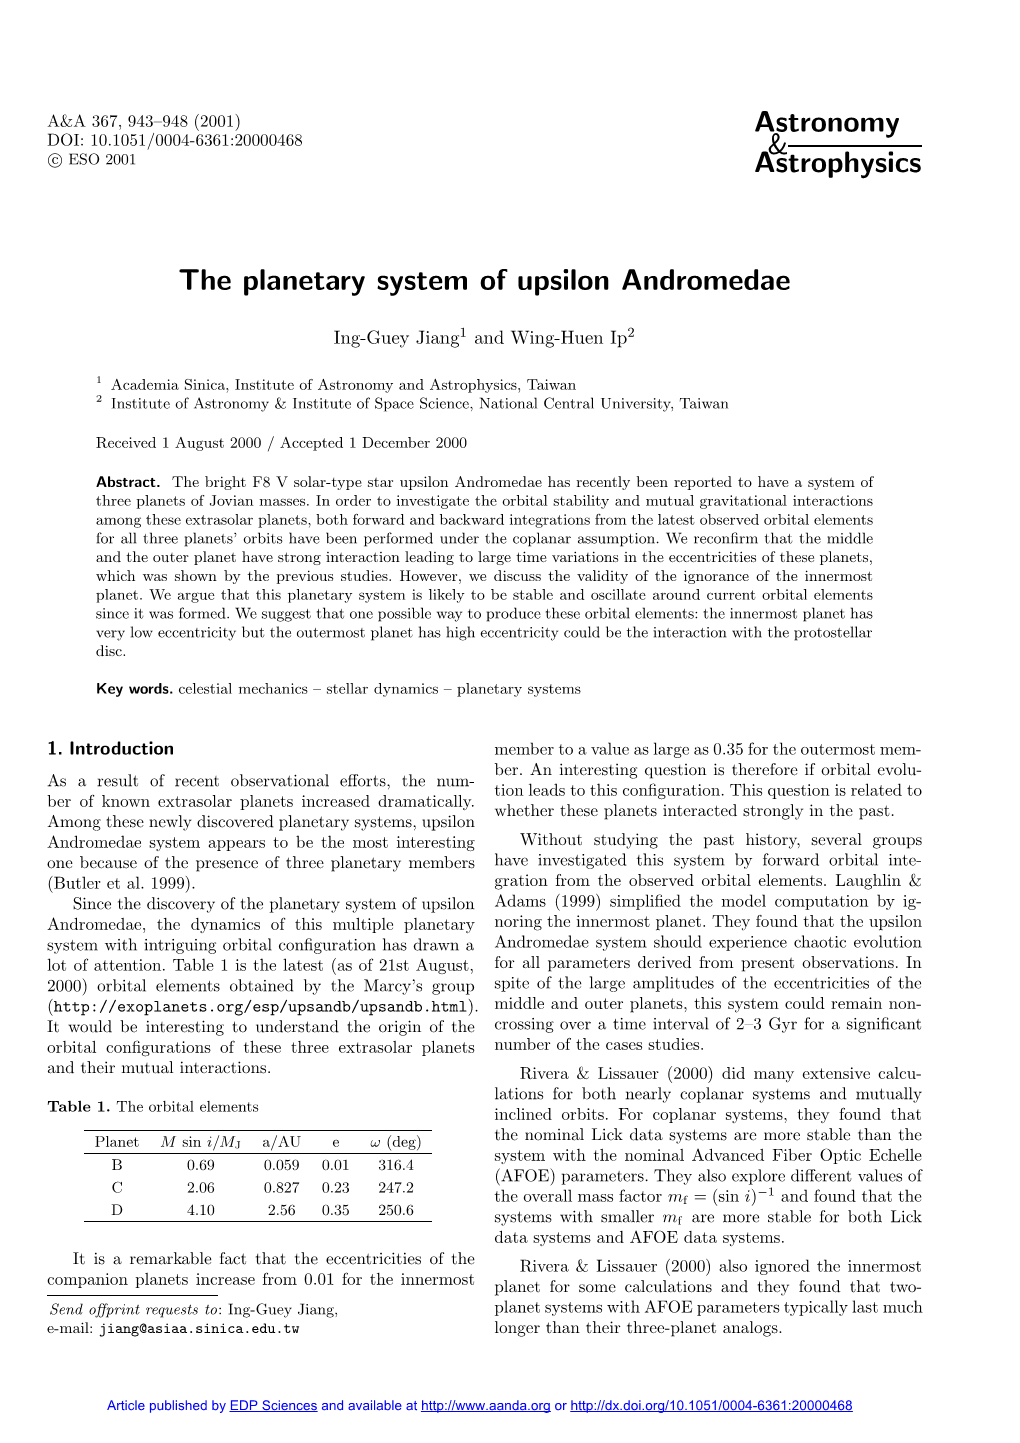 The Planetary System of Upsilon Andromedae